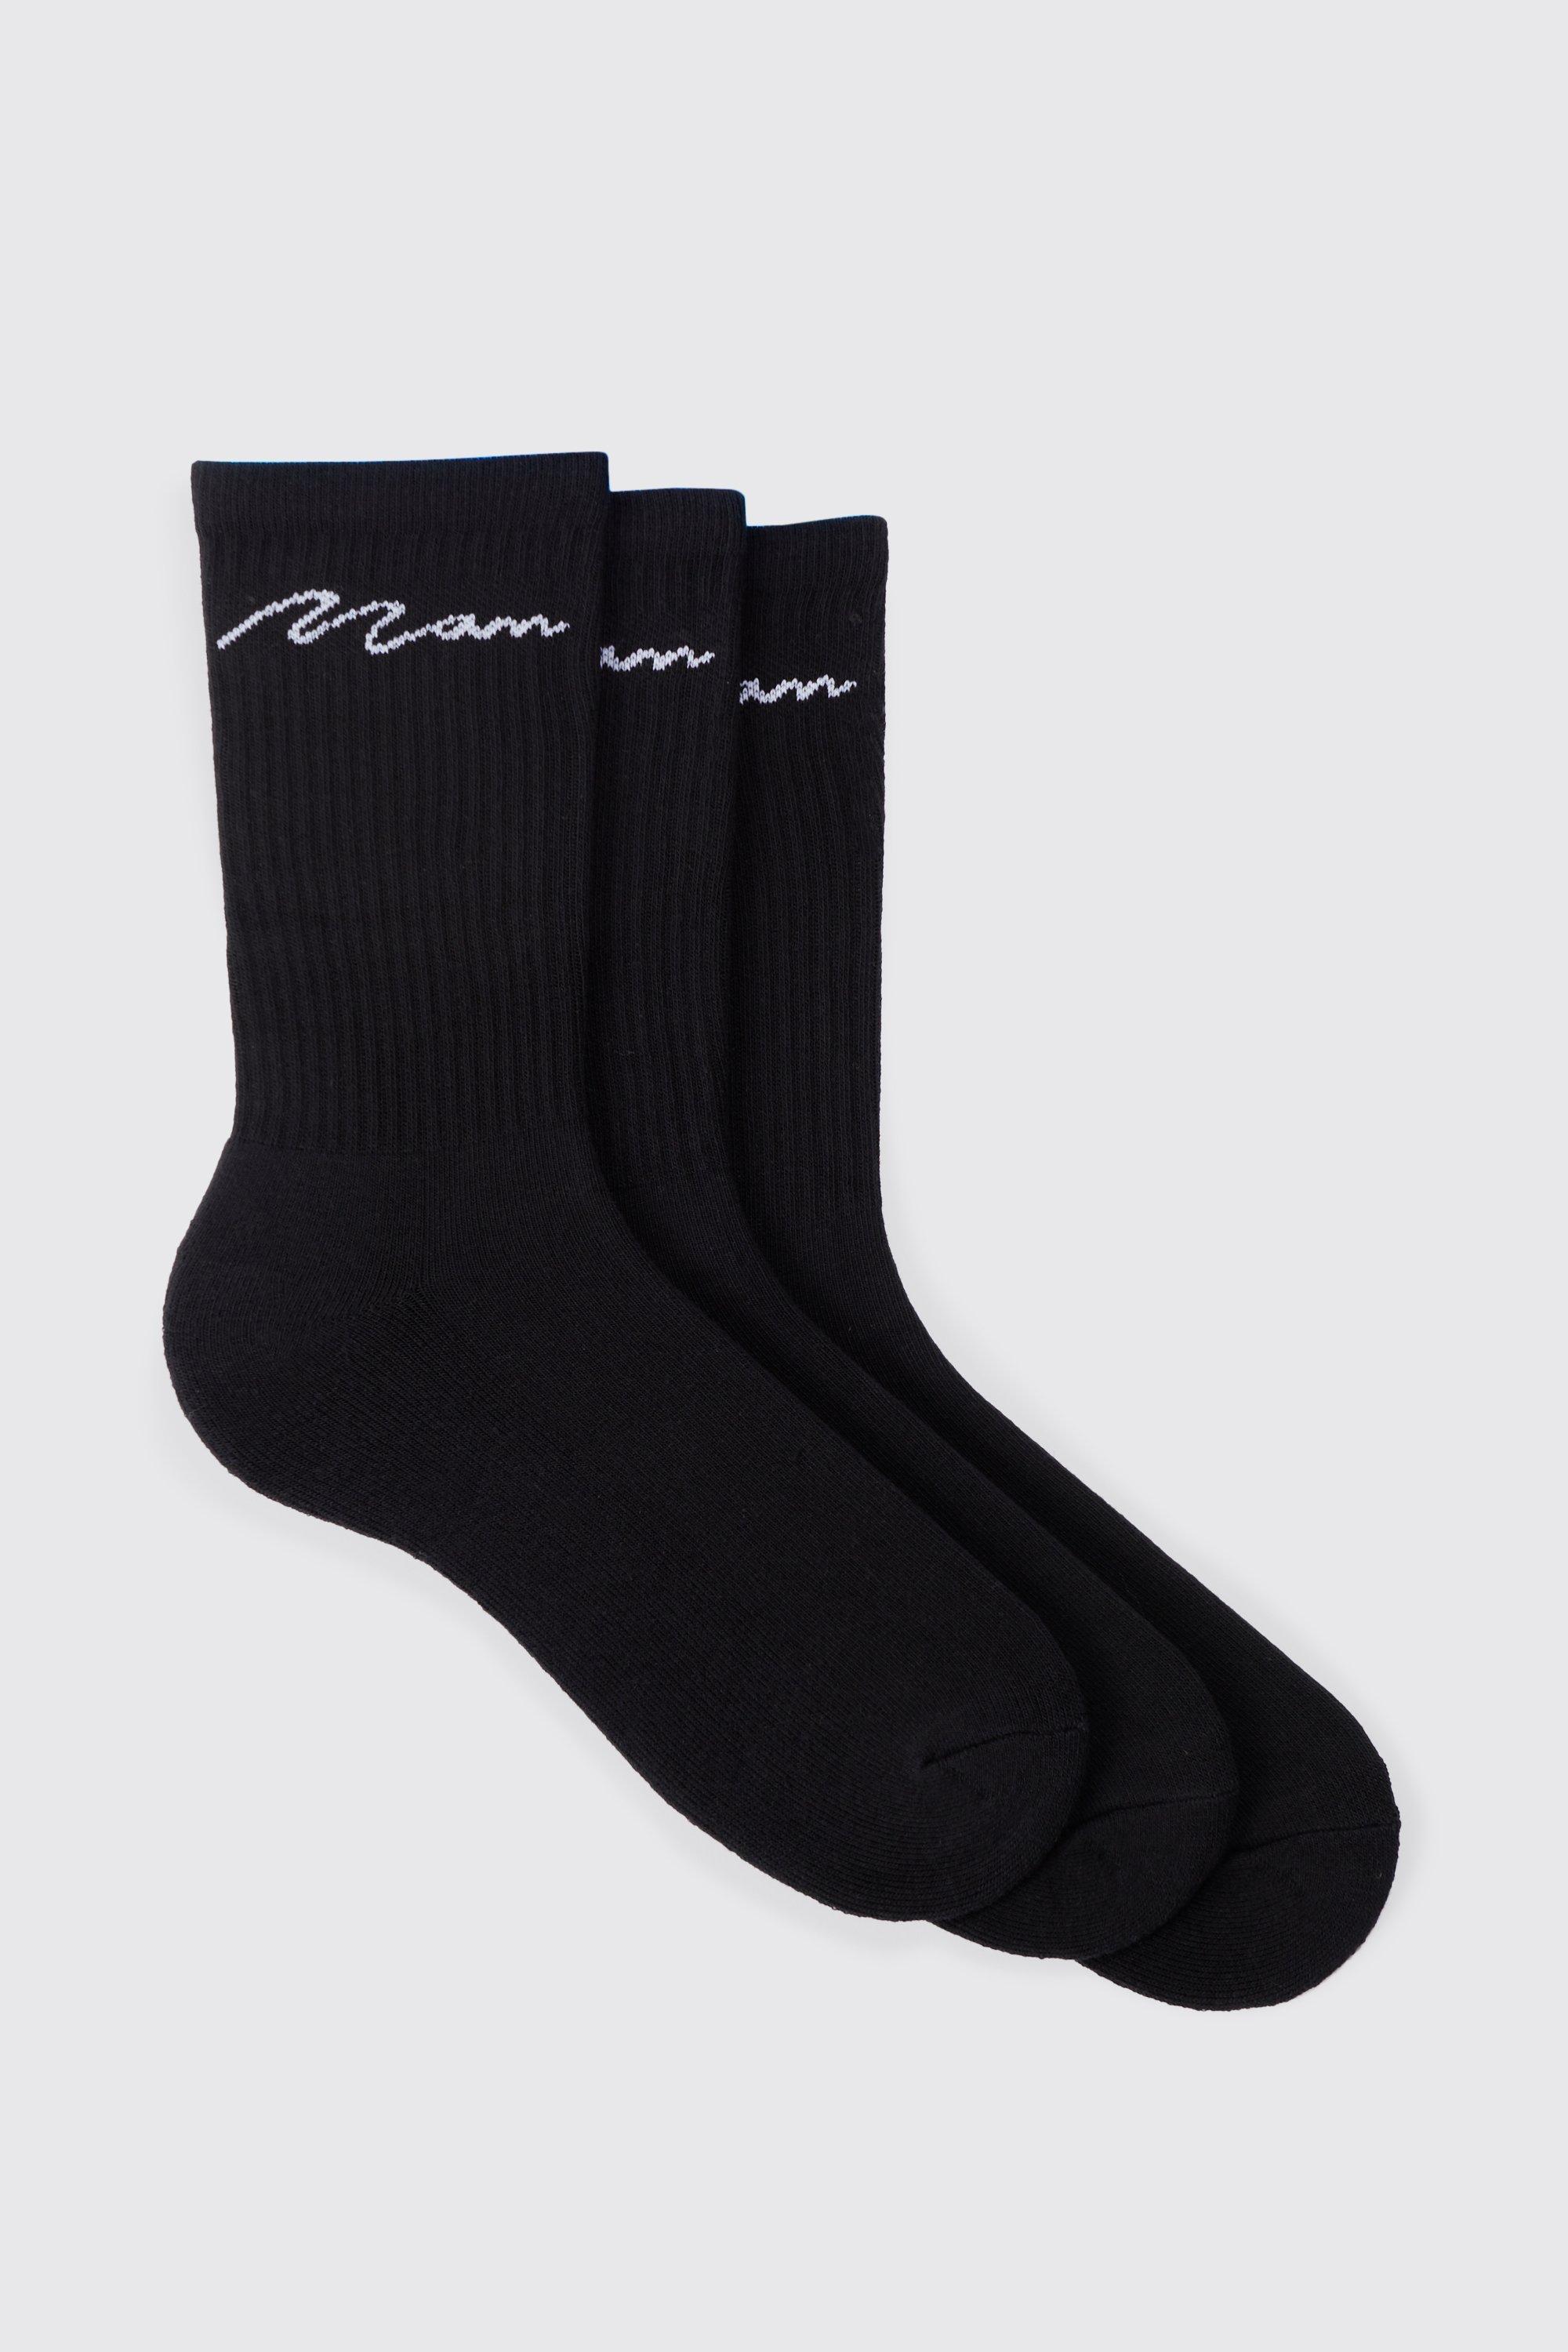 men's 3 pack man signature sport socks - black - one size, black